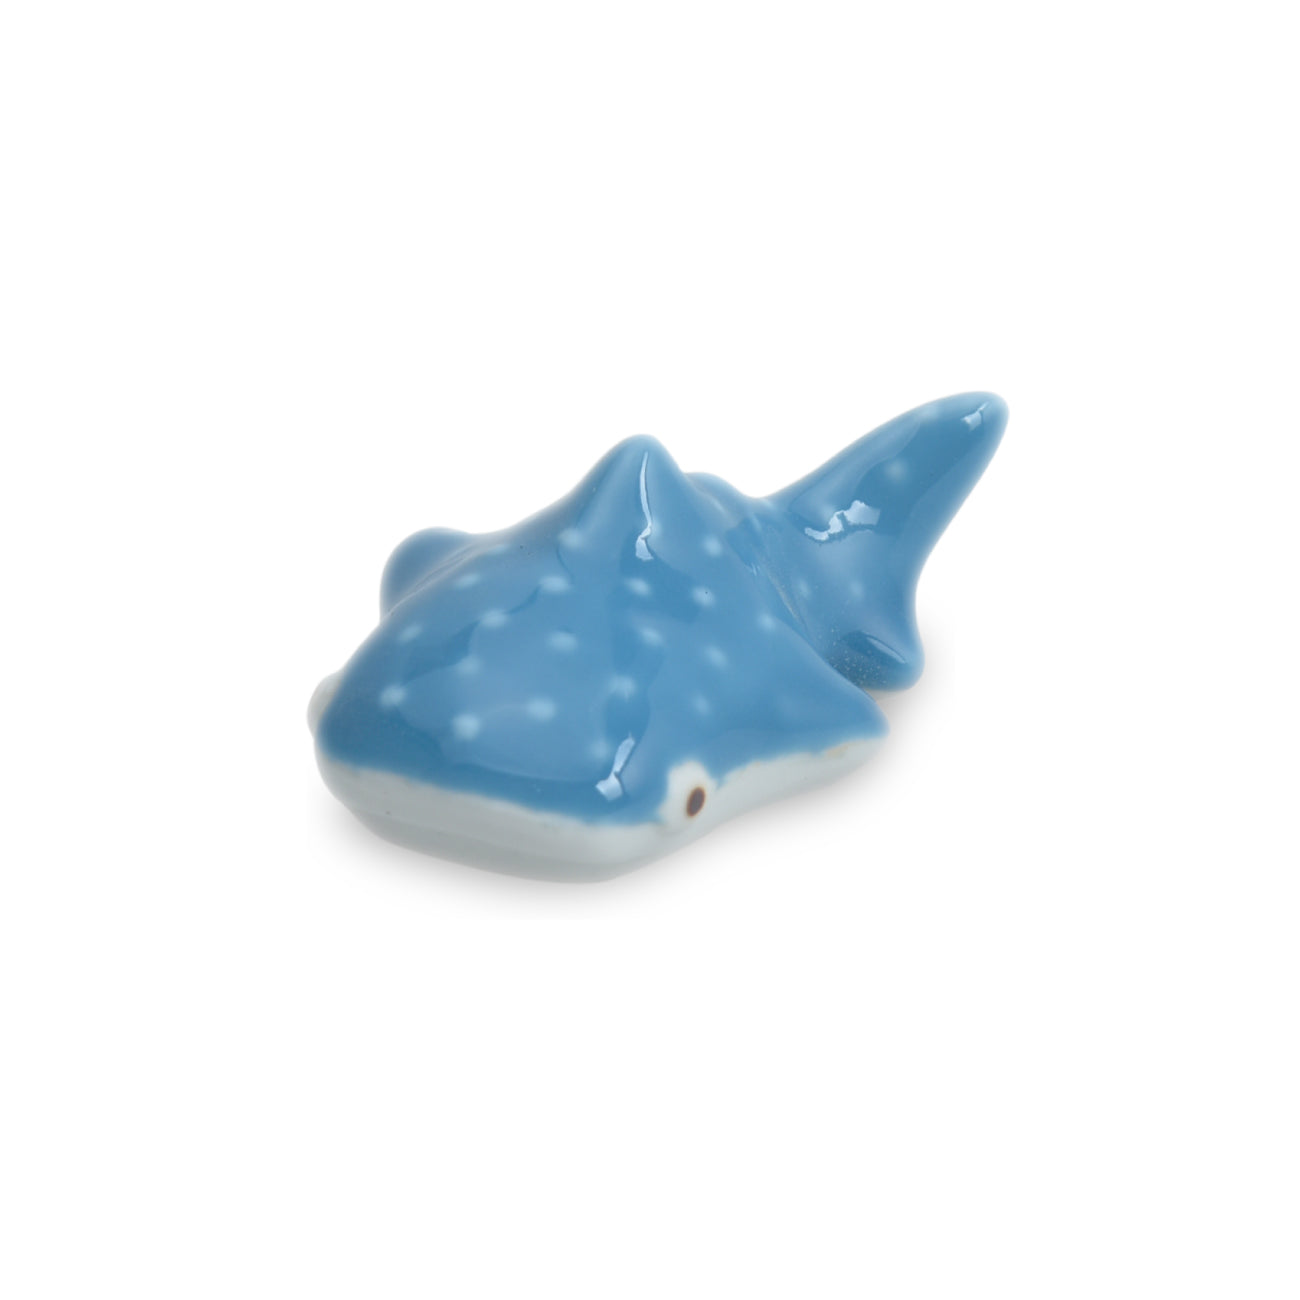 [natural69] [Whale shark] [Chopsticks] Hasami ware fashionable Nordic style blue cute